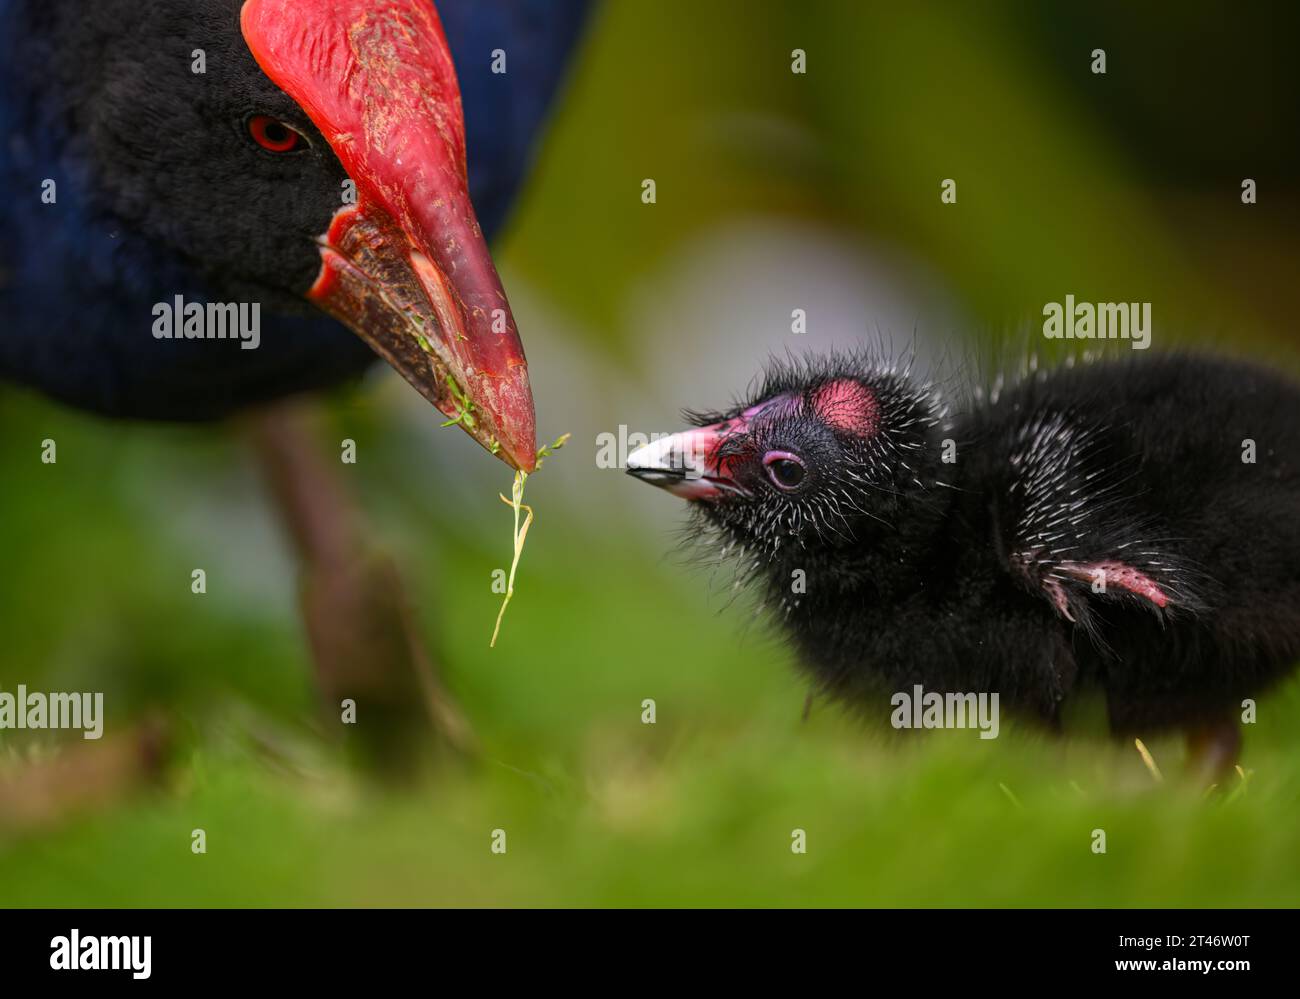 Pukeko bird mother feeding baby pukeko with nature green background. Western Springs park, Auckland. Stock Photo